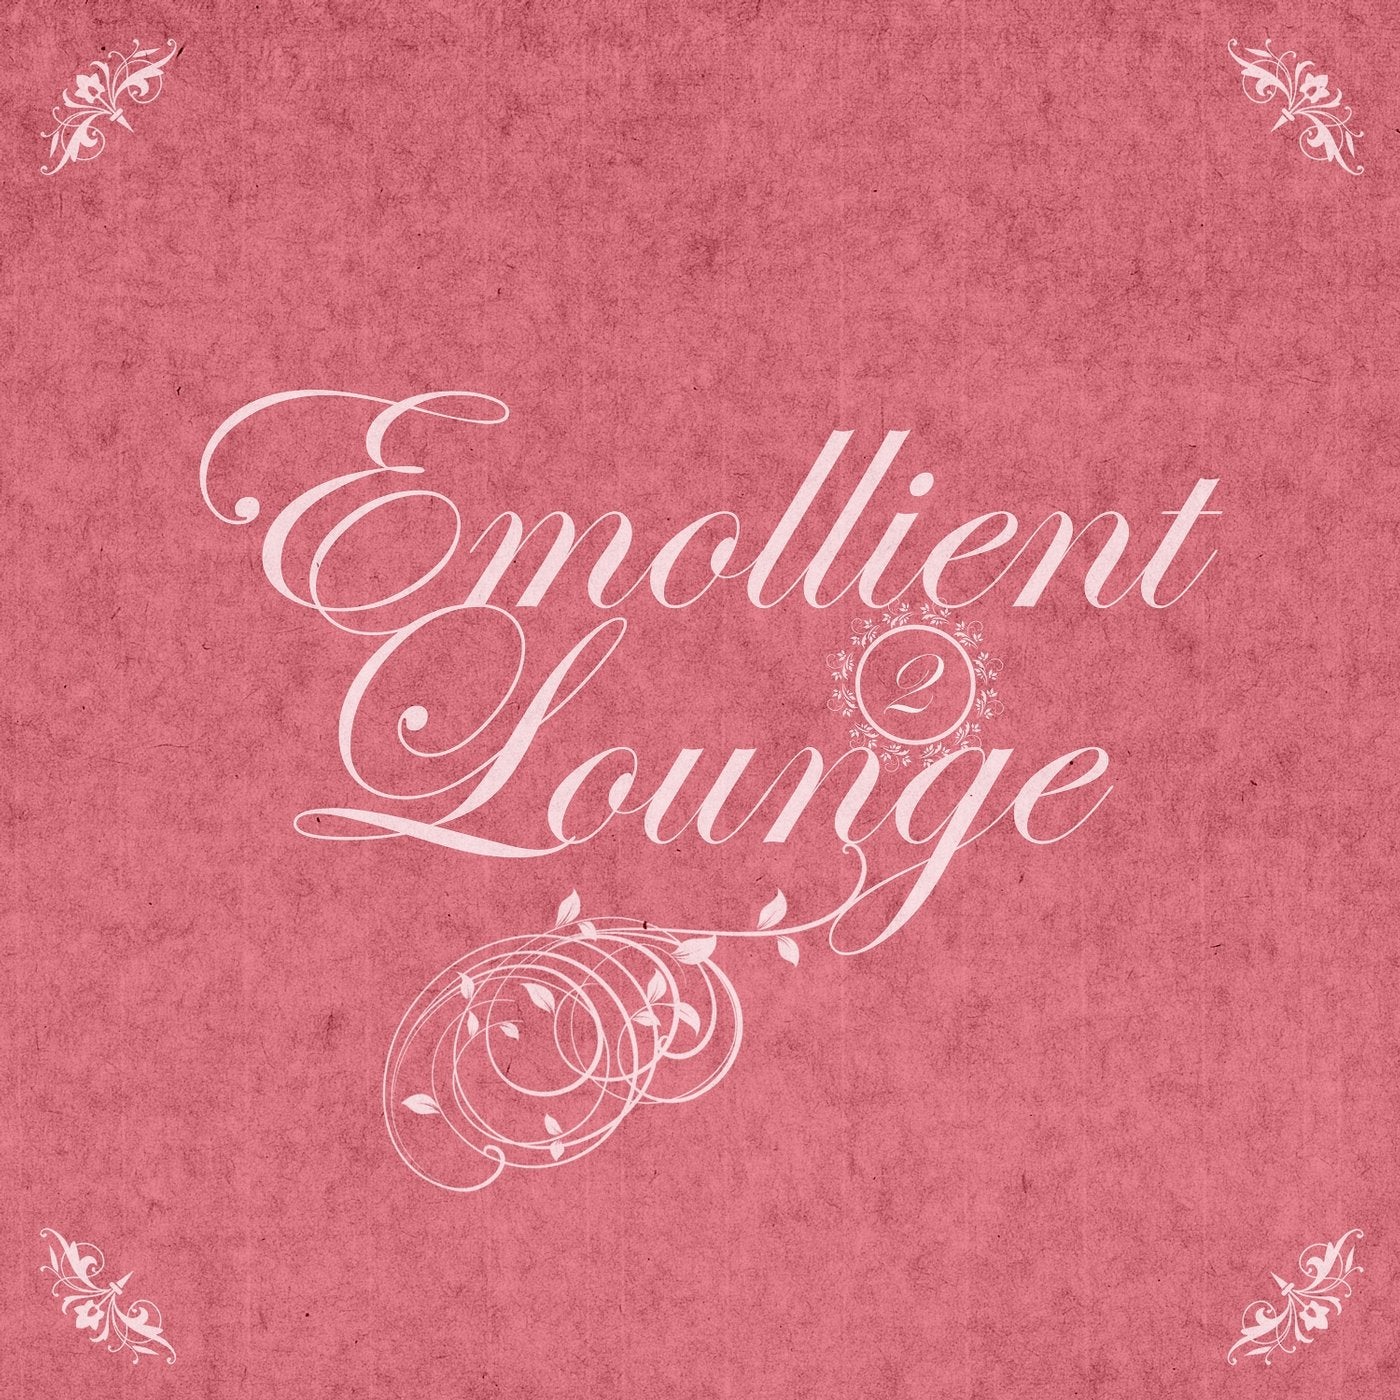 Emollient Lounge, Vol.02